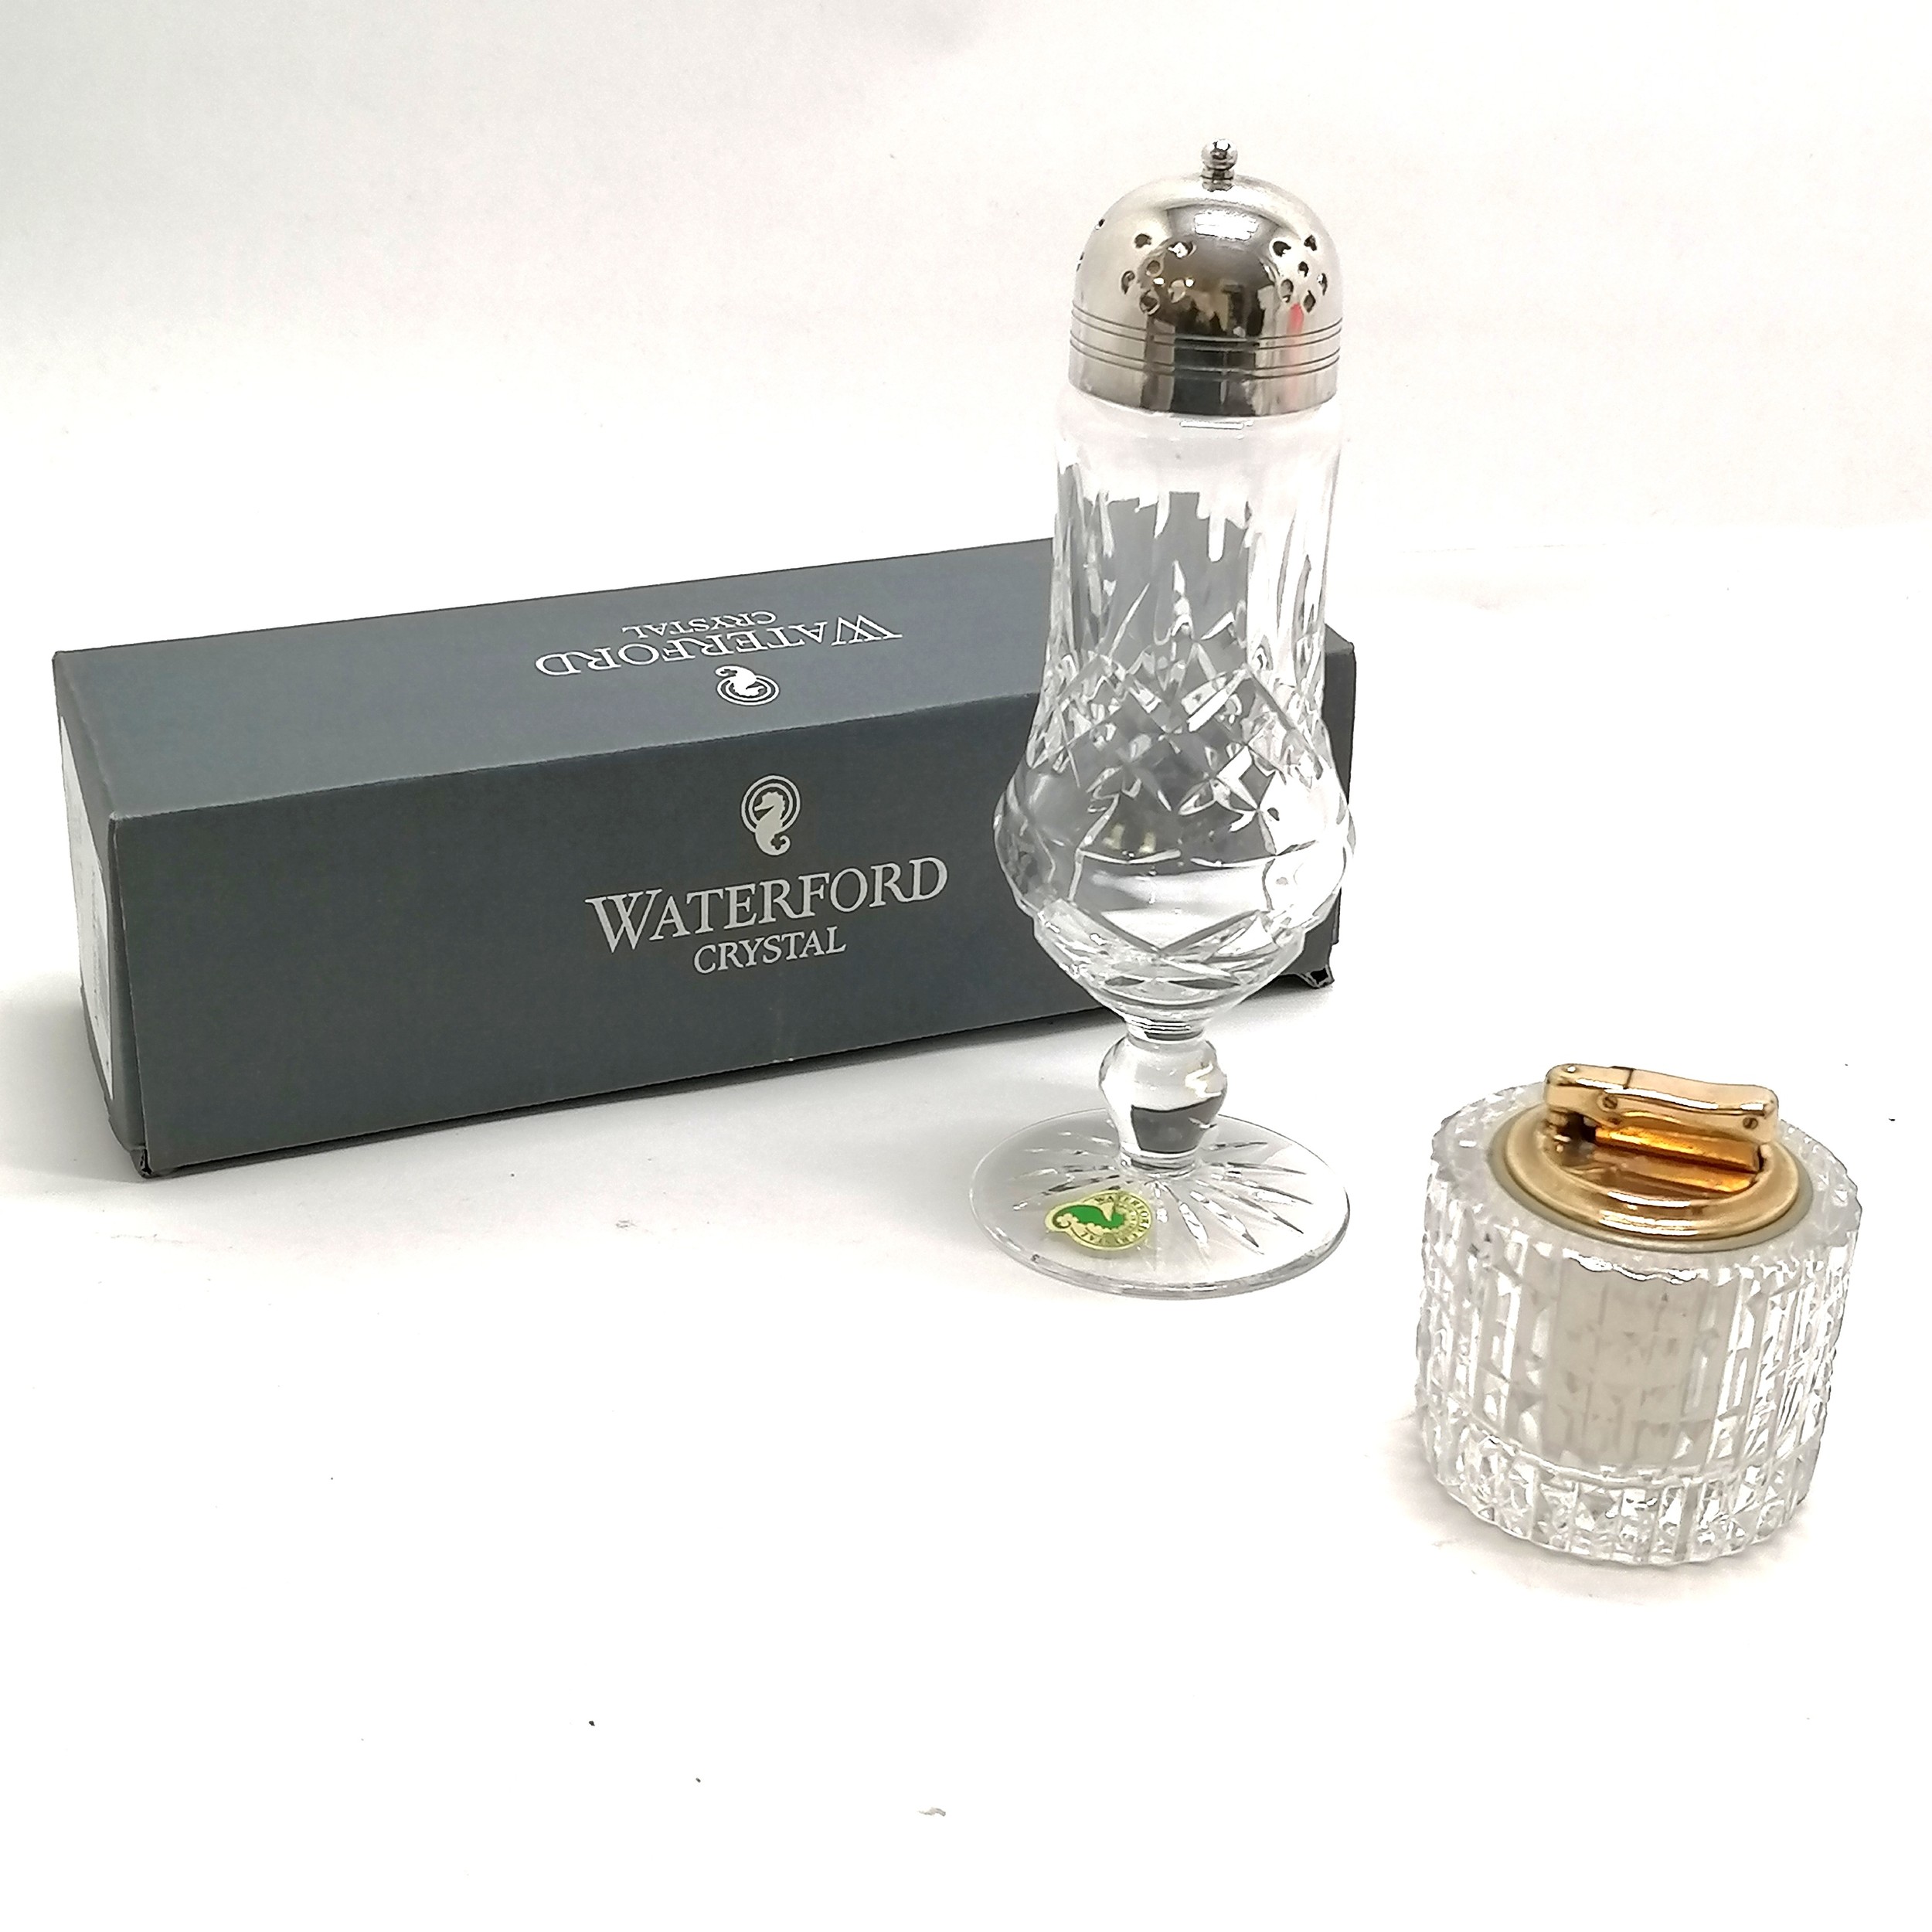 Waterford crystal sugar castor boxed 30cm high T/W a Collbri Webb Corbett crystal table lighter